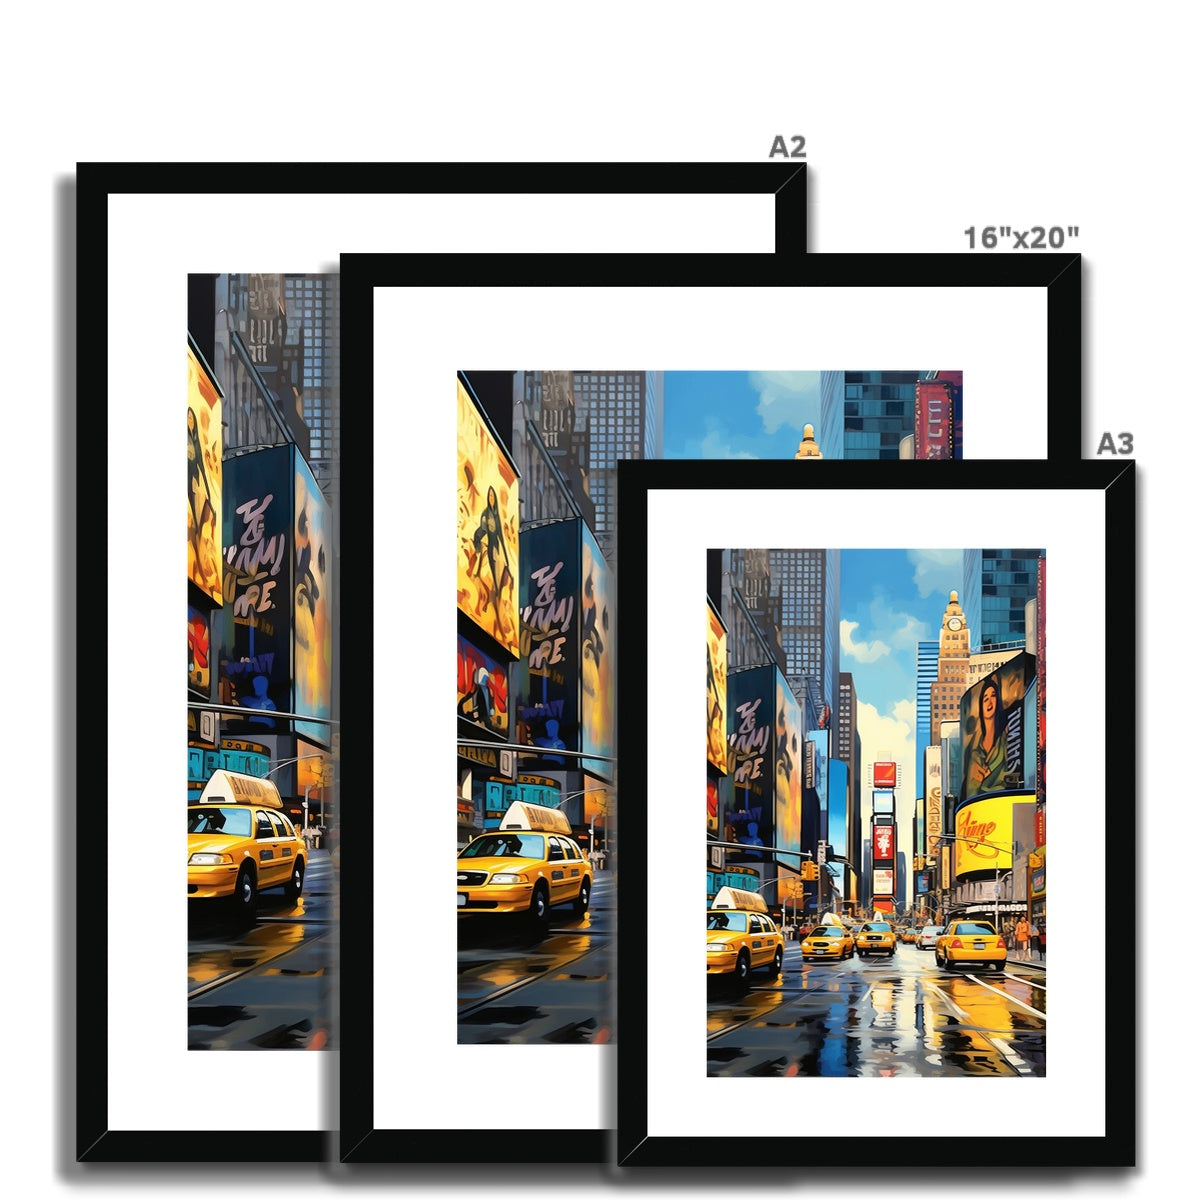 Broadway, New York  Framed & Mounted Print